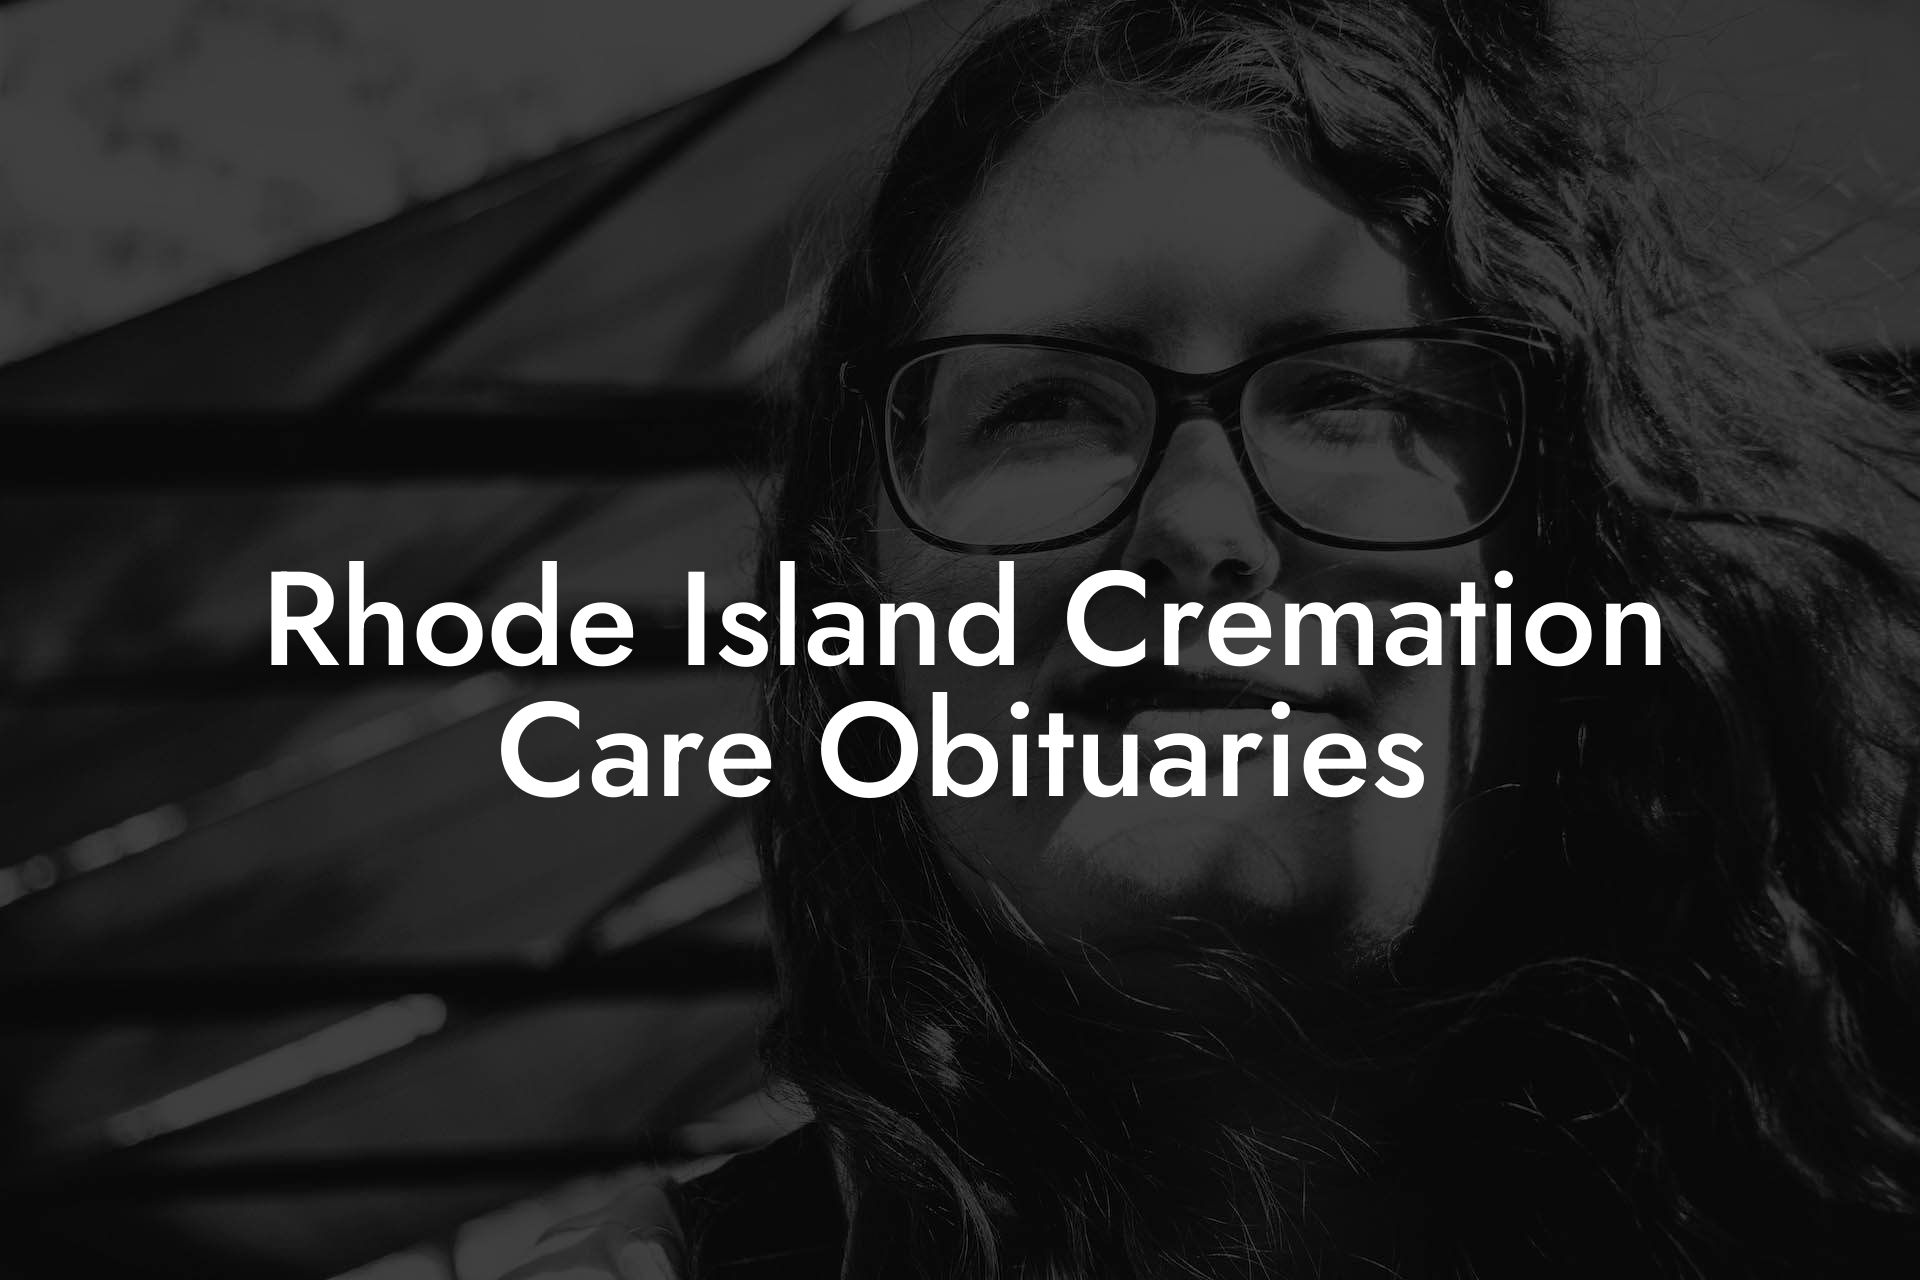 Rhode Island Cremation Care Obituaries